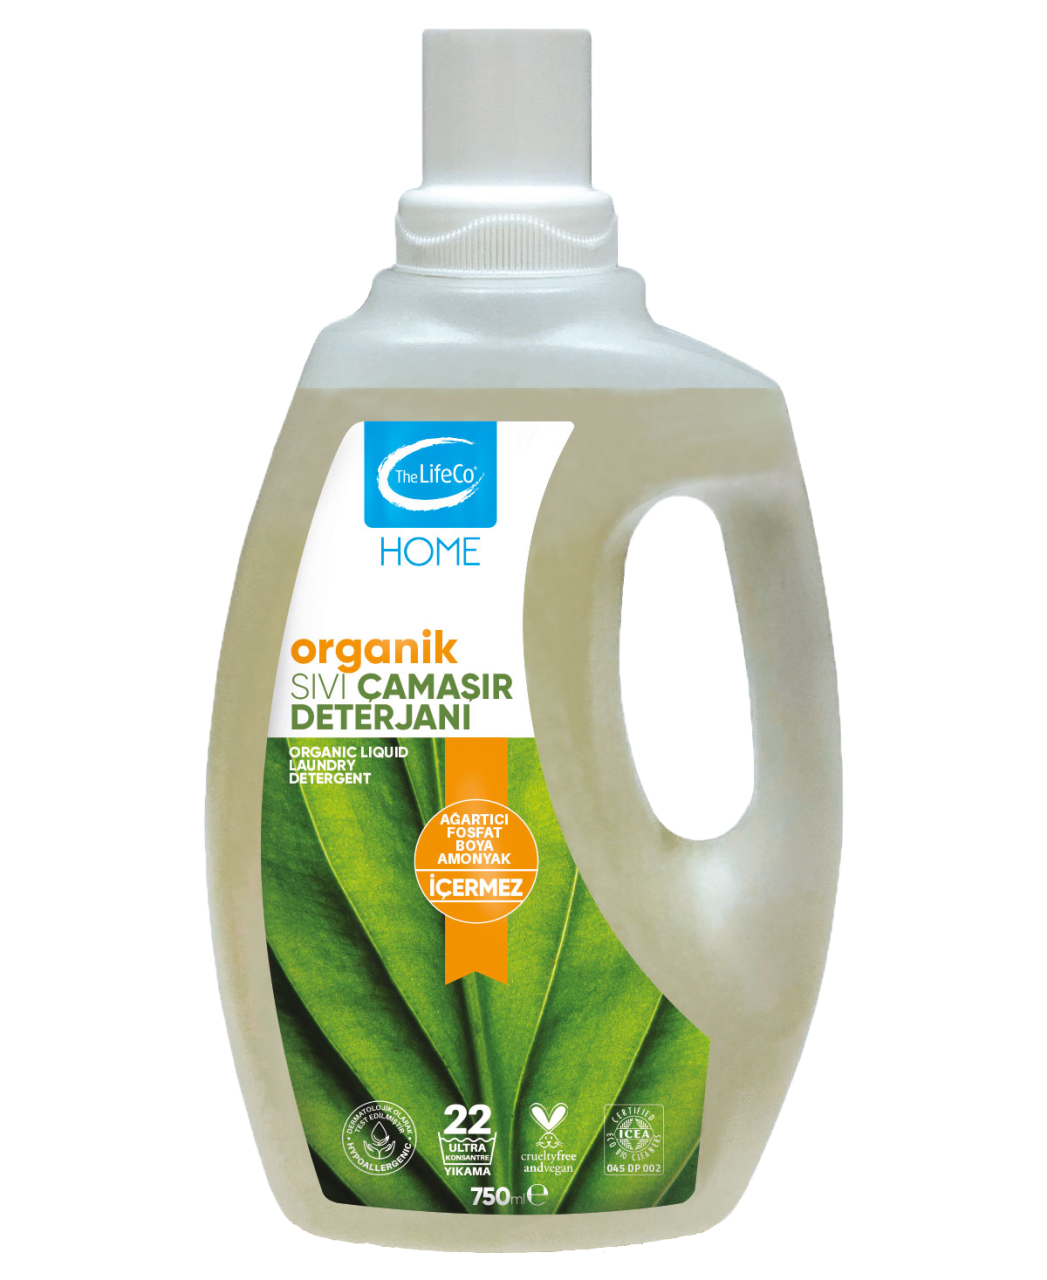 The LifeCo Home Organik Sıvı Çamaşır Deterjanı 750 ml